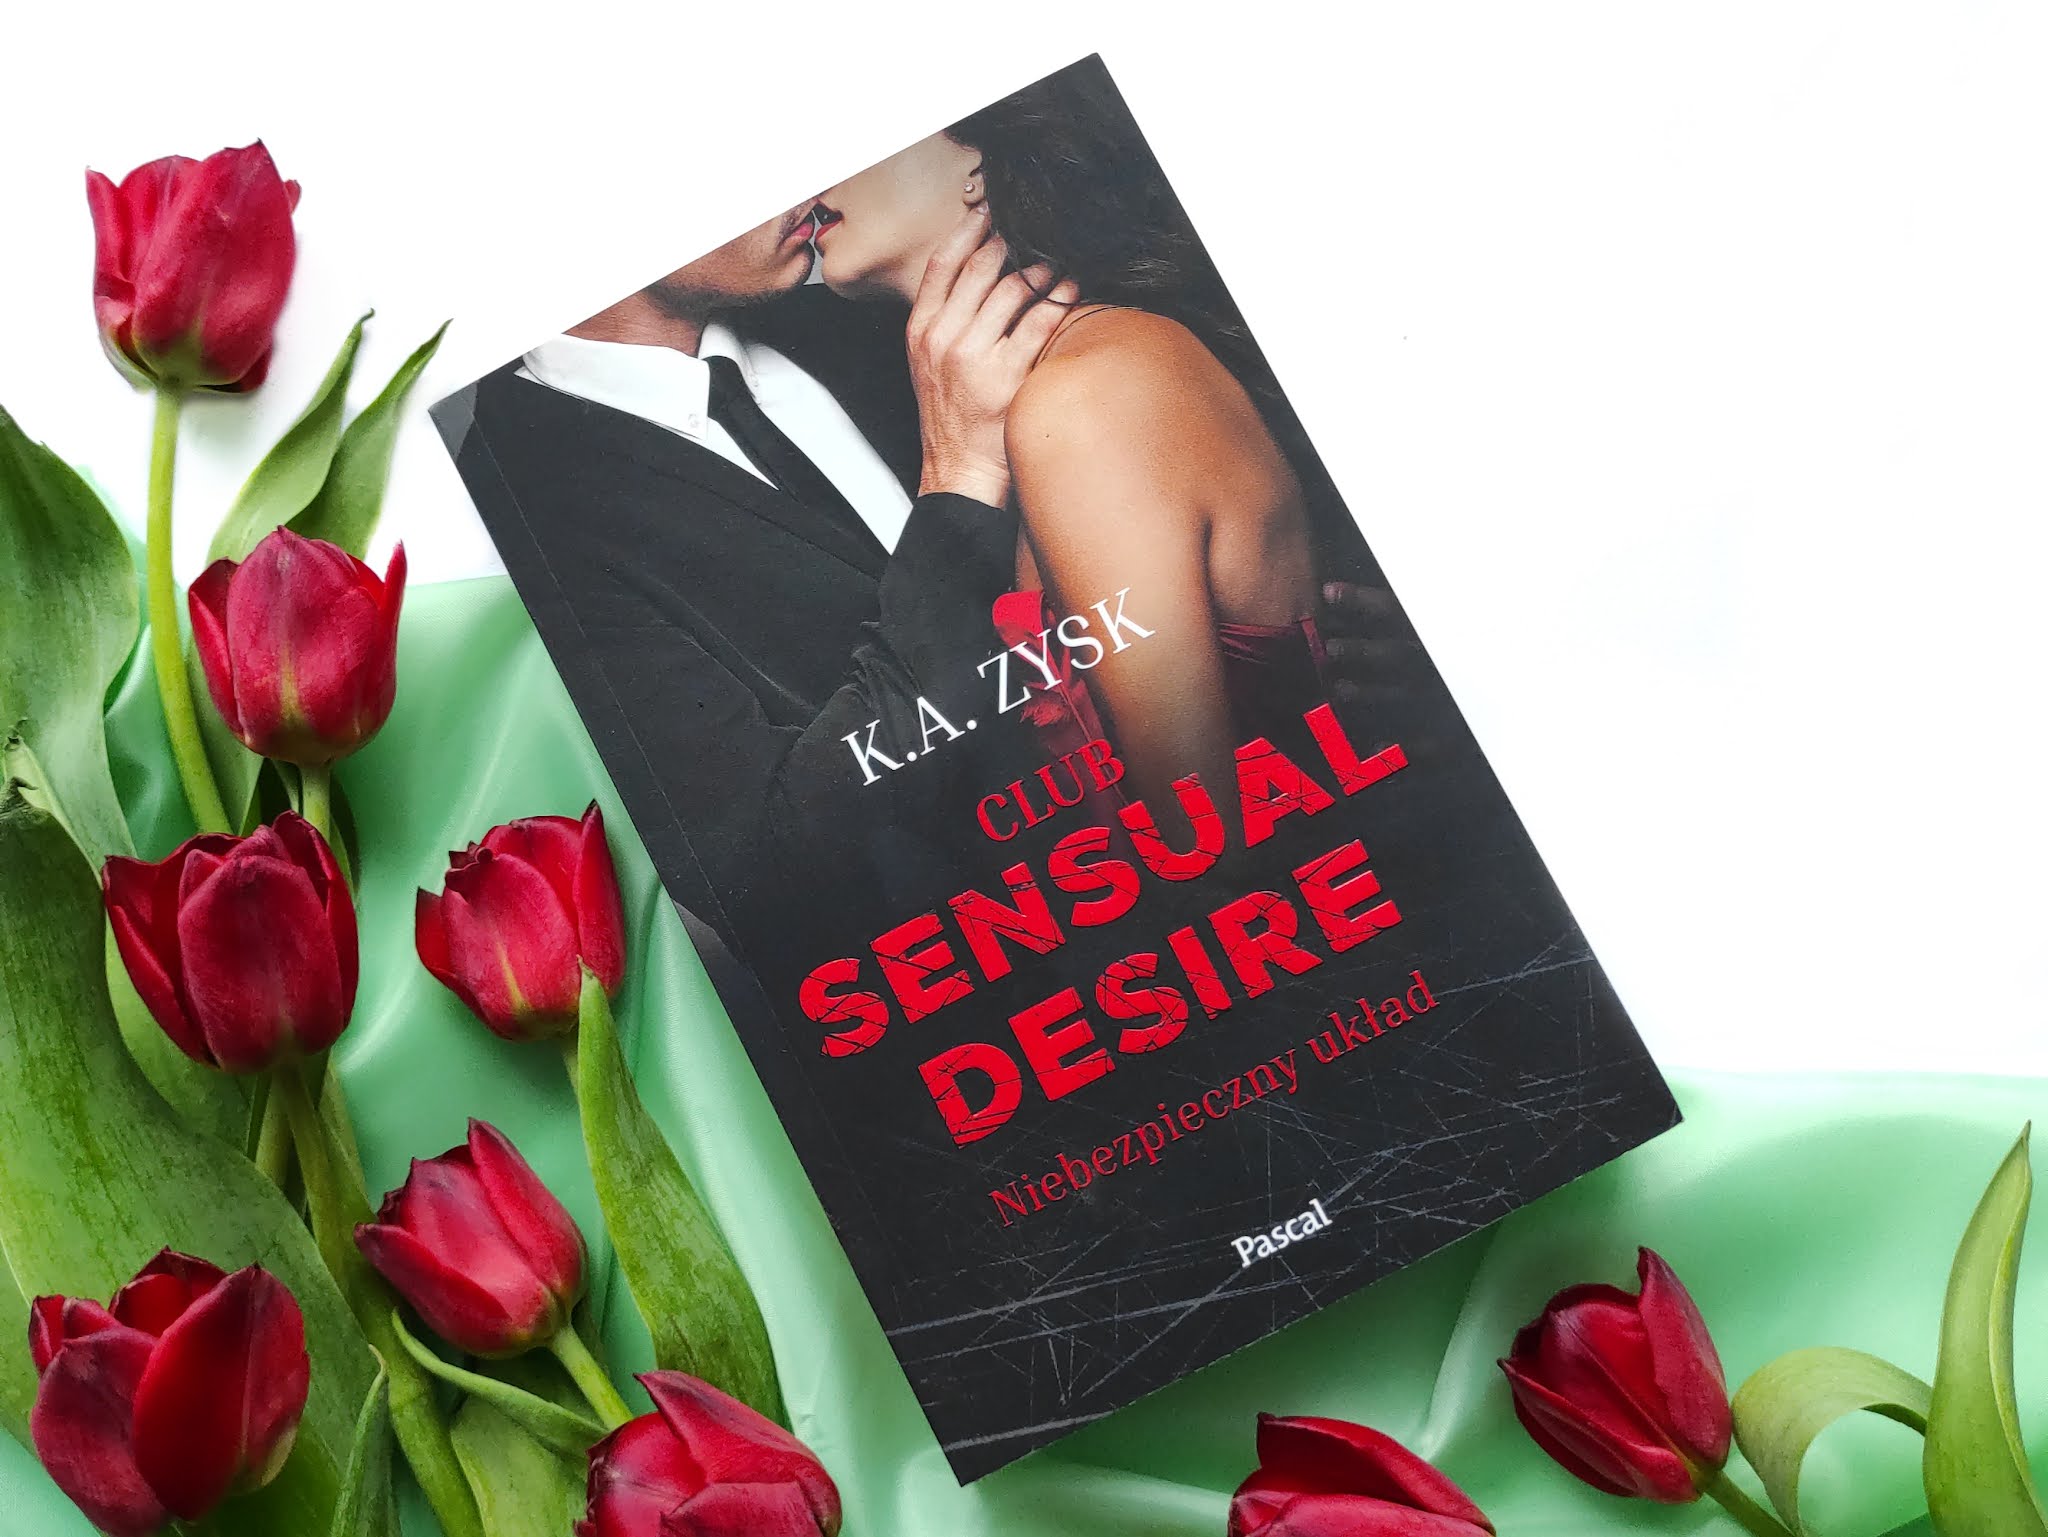 Club Sensual Desire recenzja książki